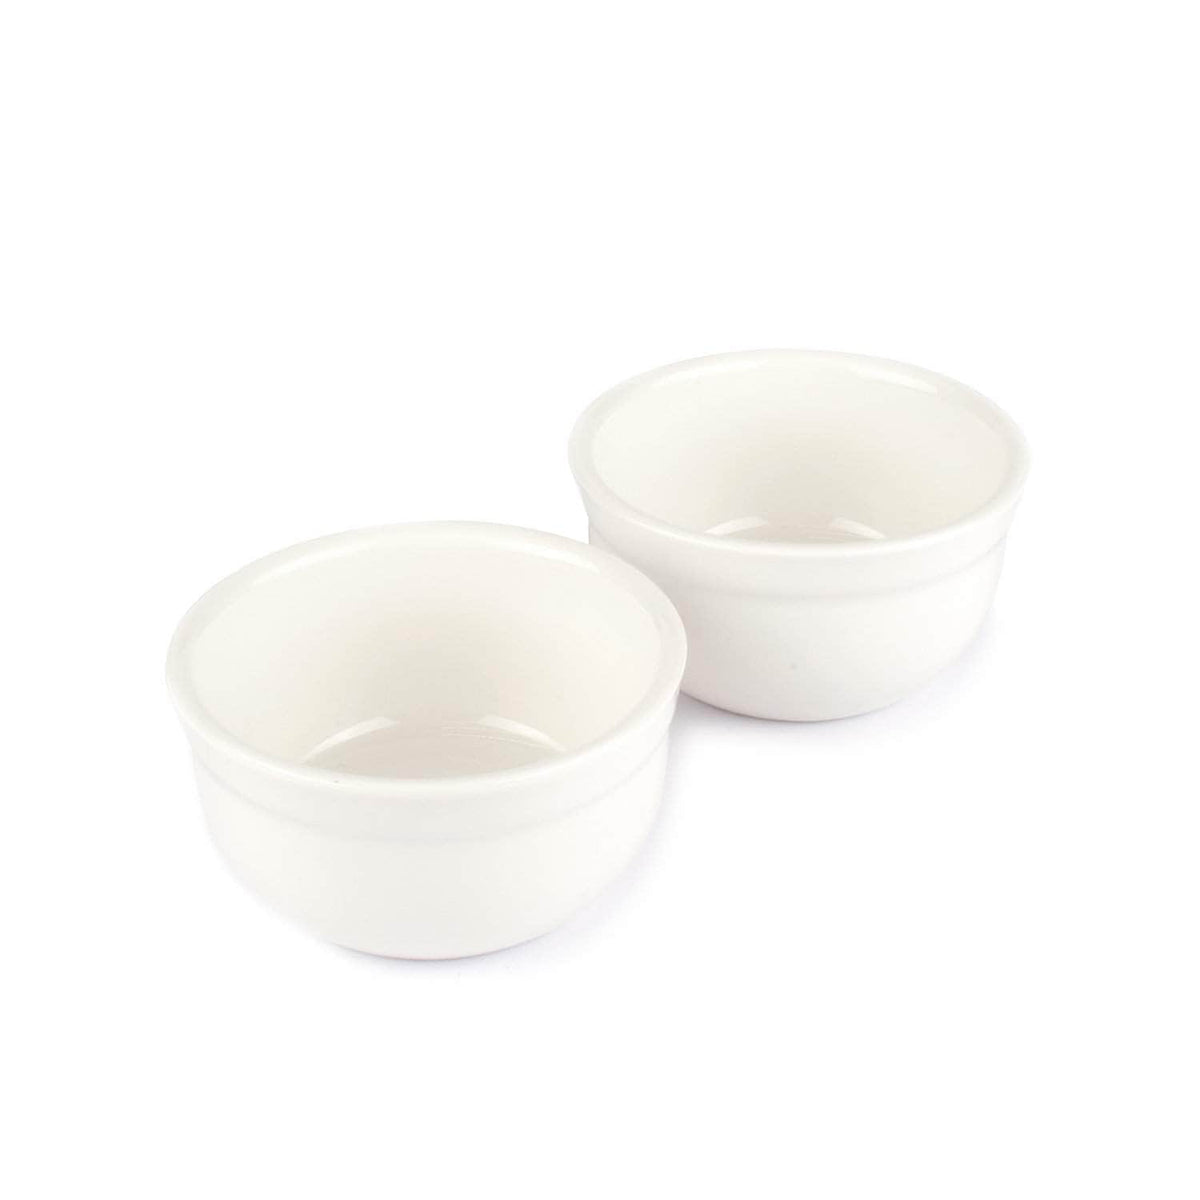 Porcelain Ramekins, set of 2